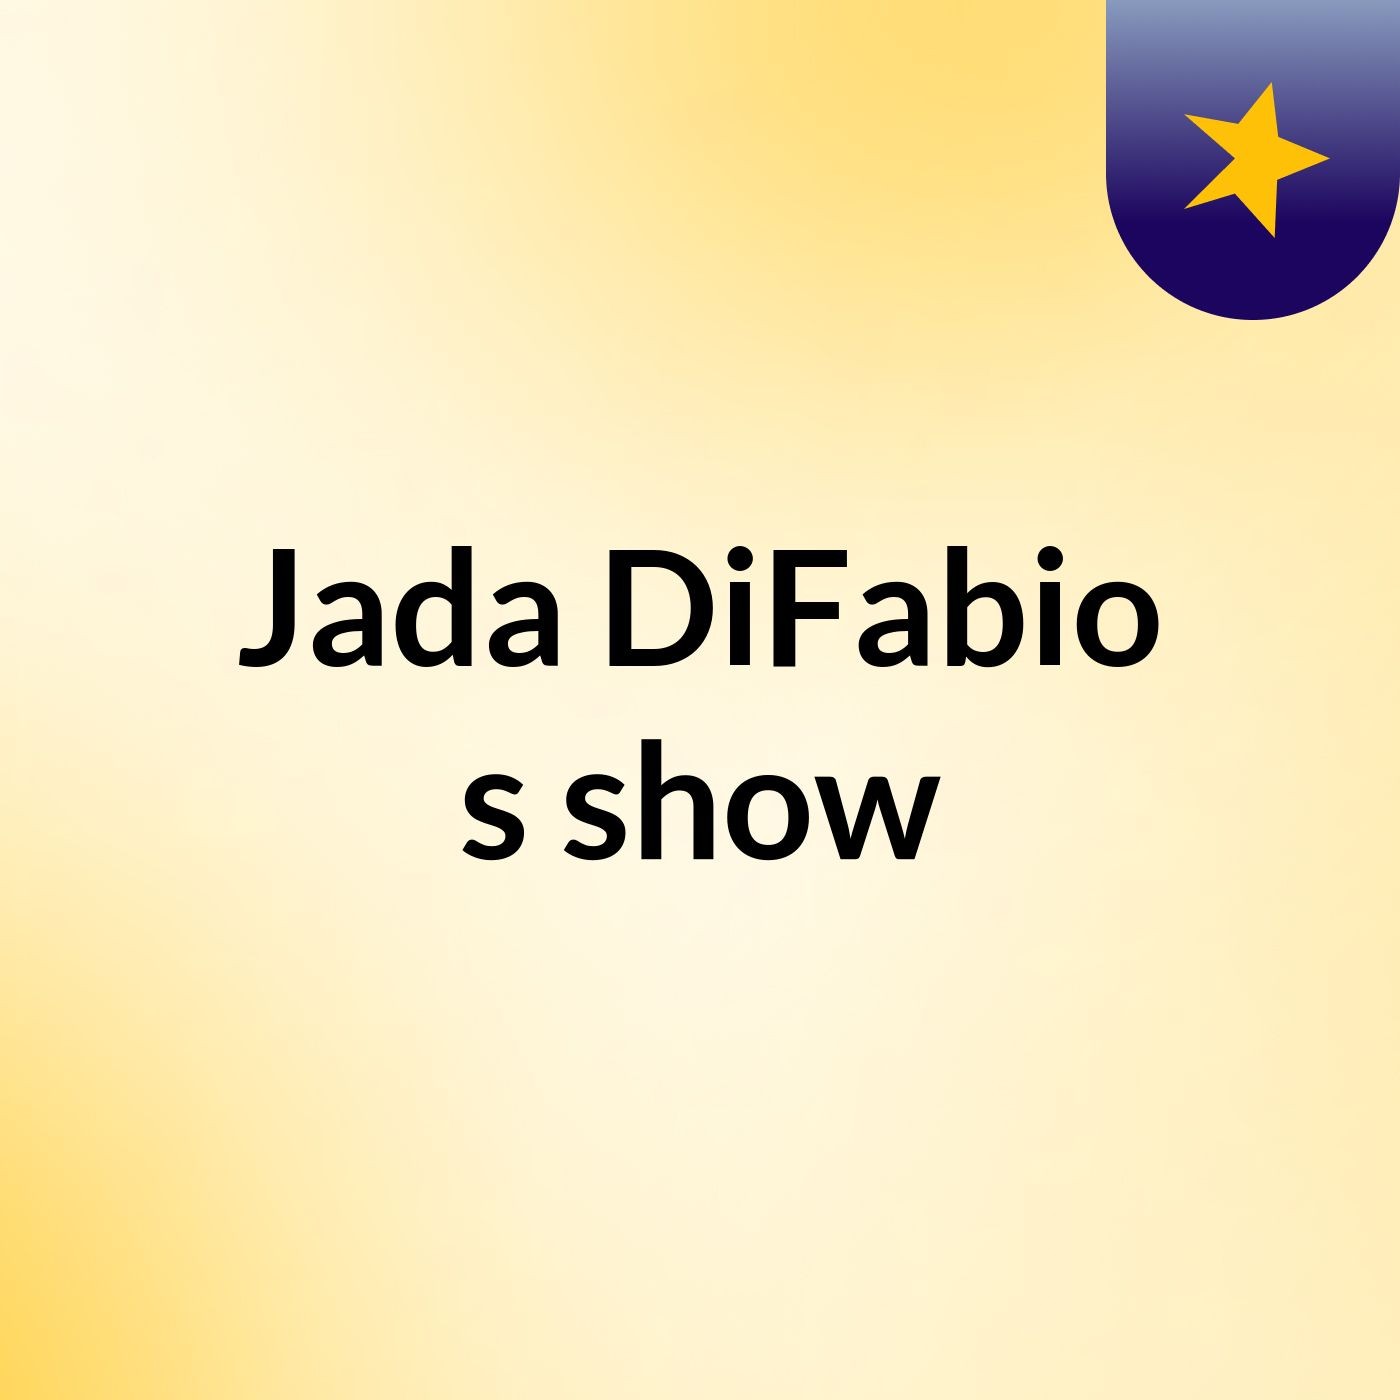 Episode 8 - Jada DiFabio's show